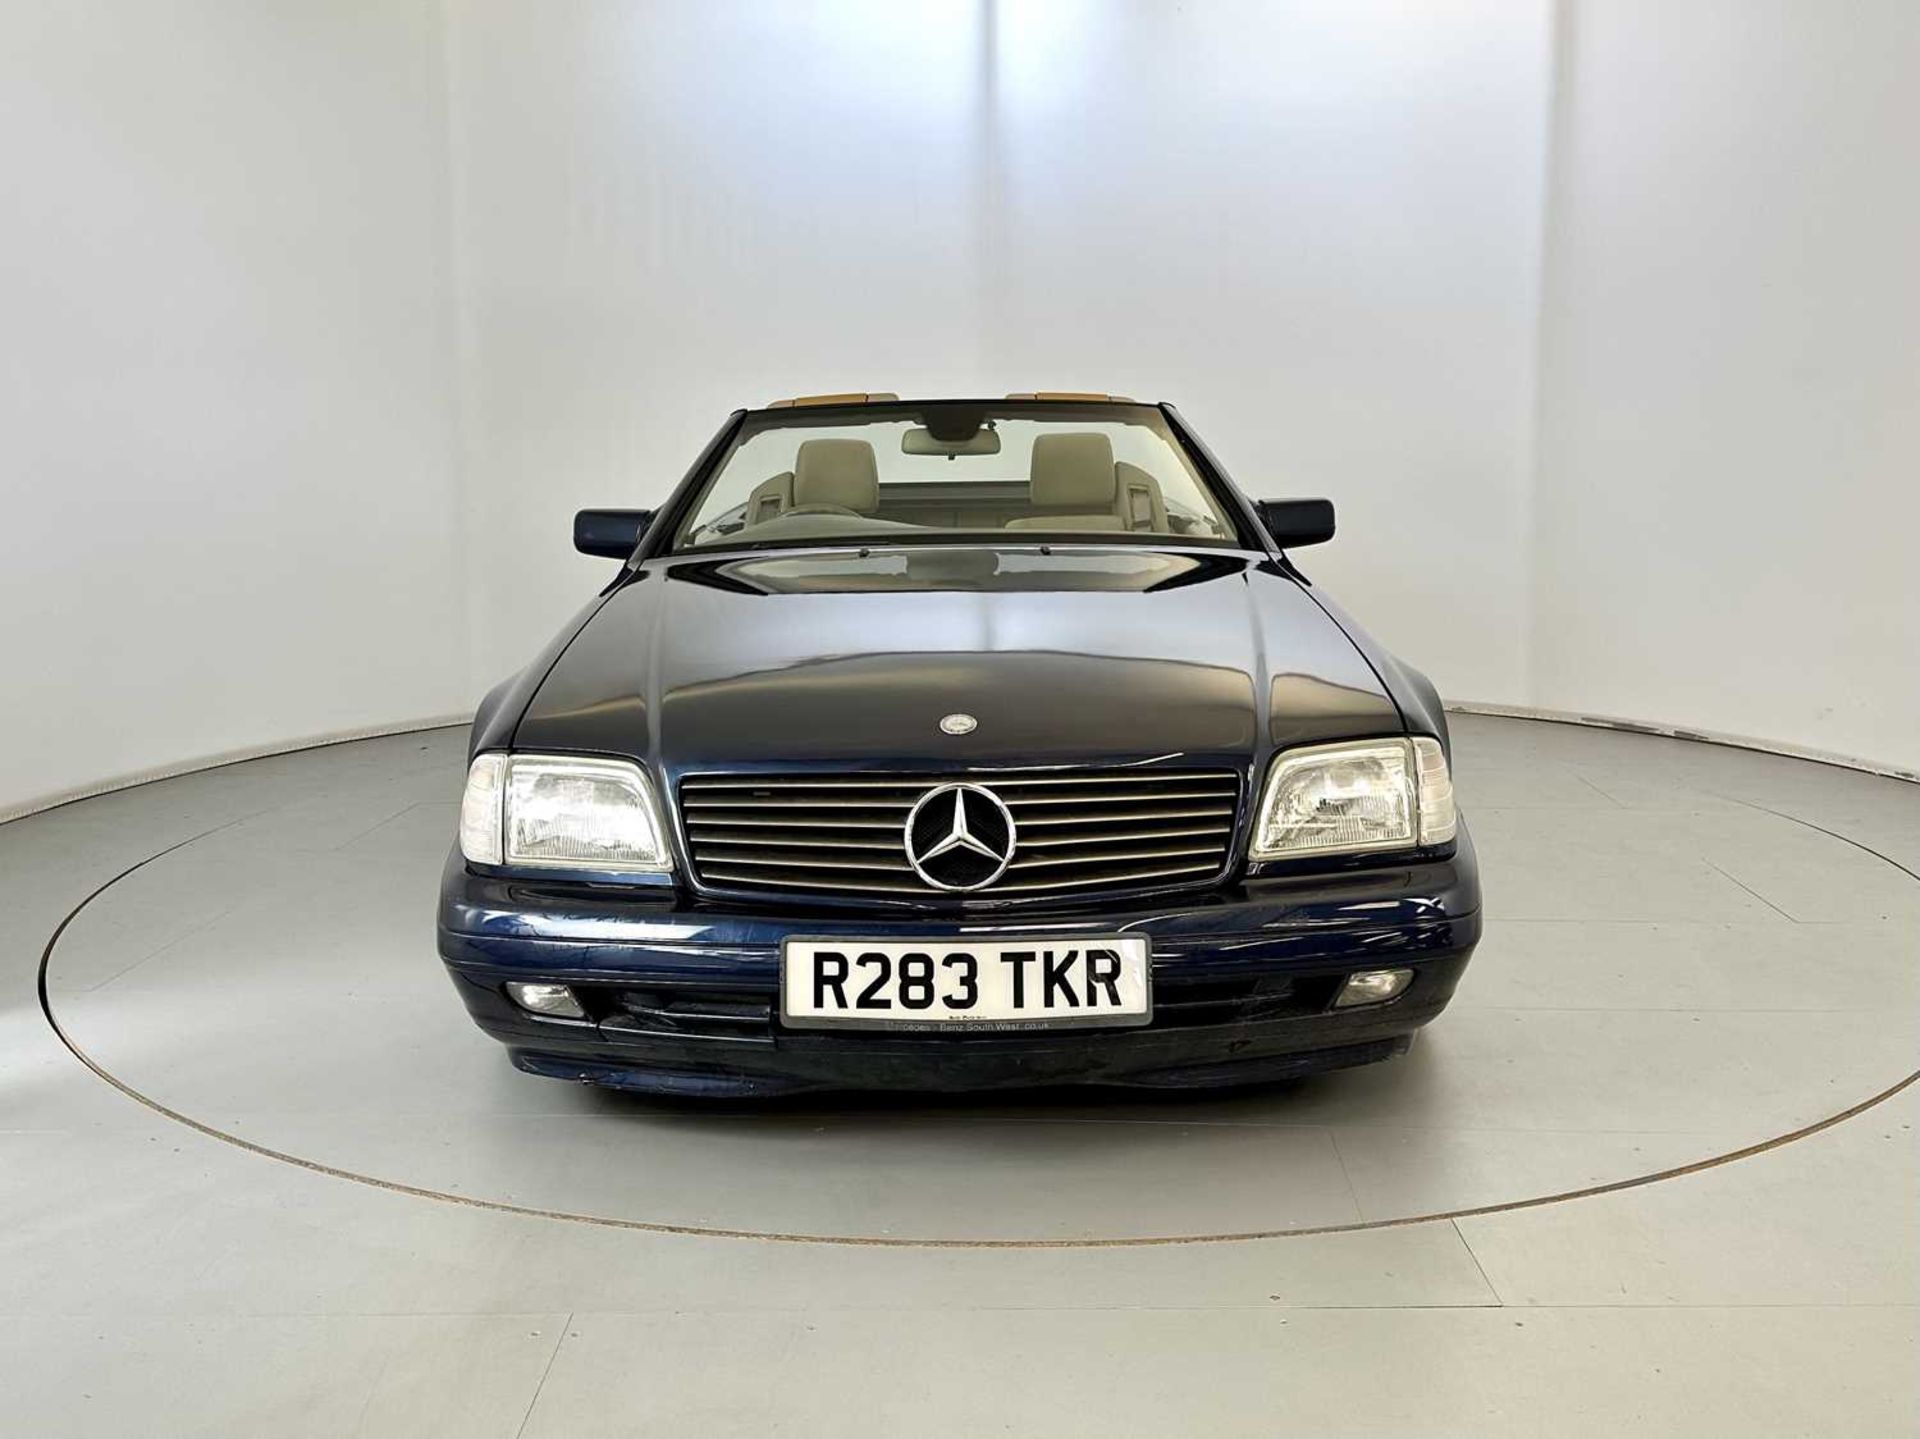 1997 Mercedes-Benz SL280 - Image 2 of 28